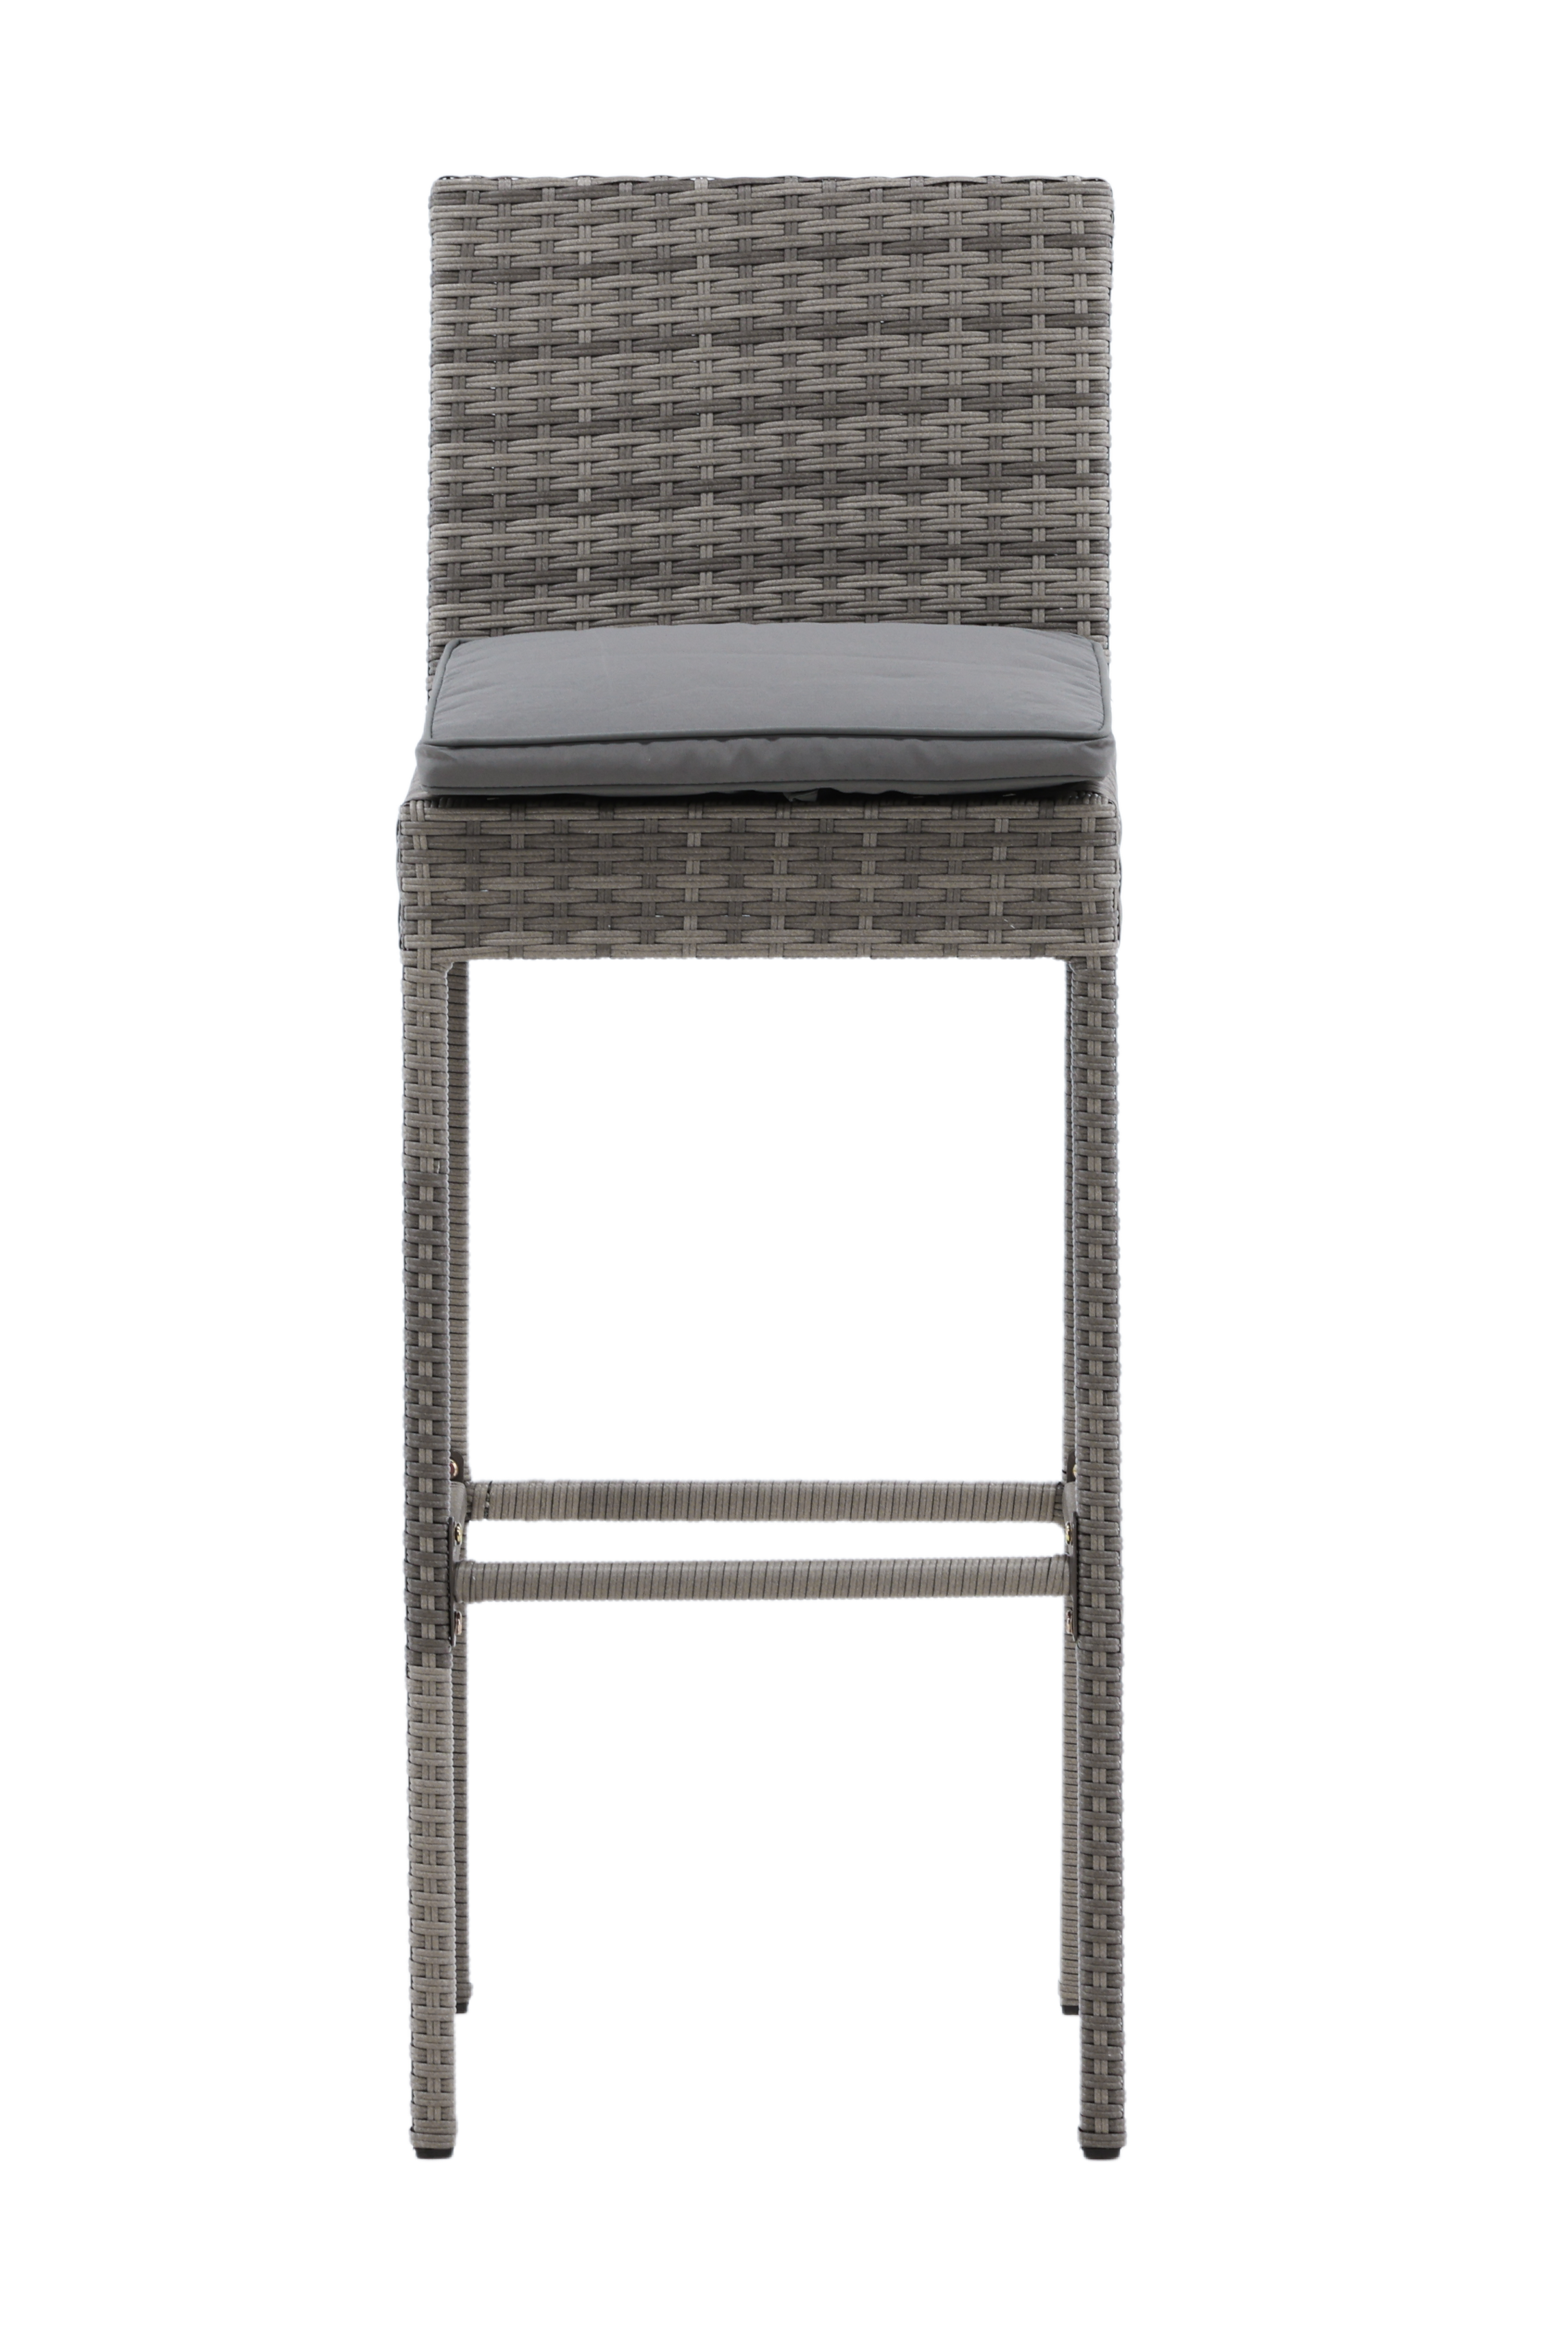 VENTURE DESIGN Alo udendørs barstol, m. ryglæn og fodstøtte - grå polyrattan og aluminium